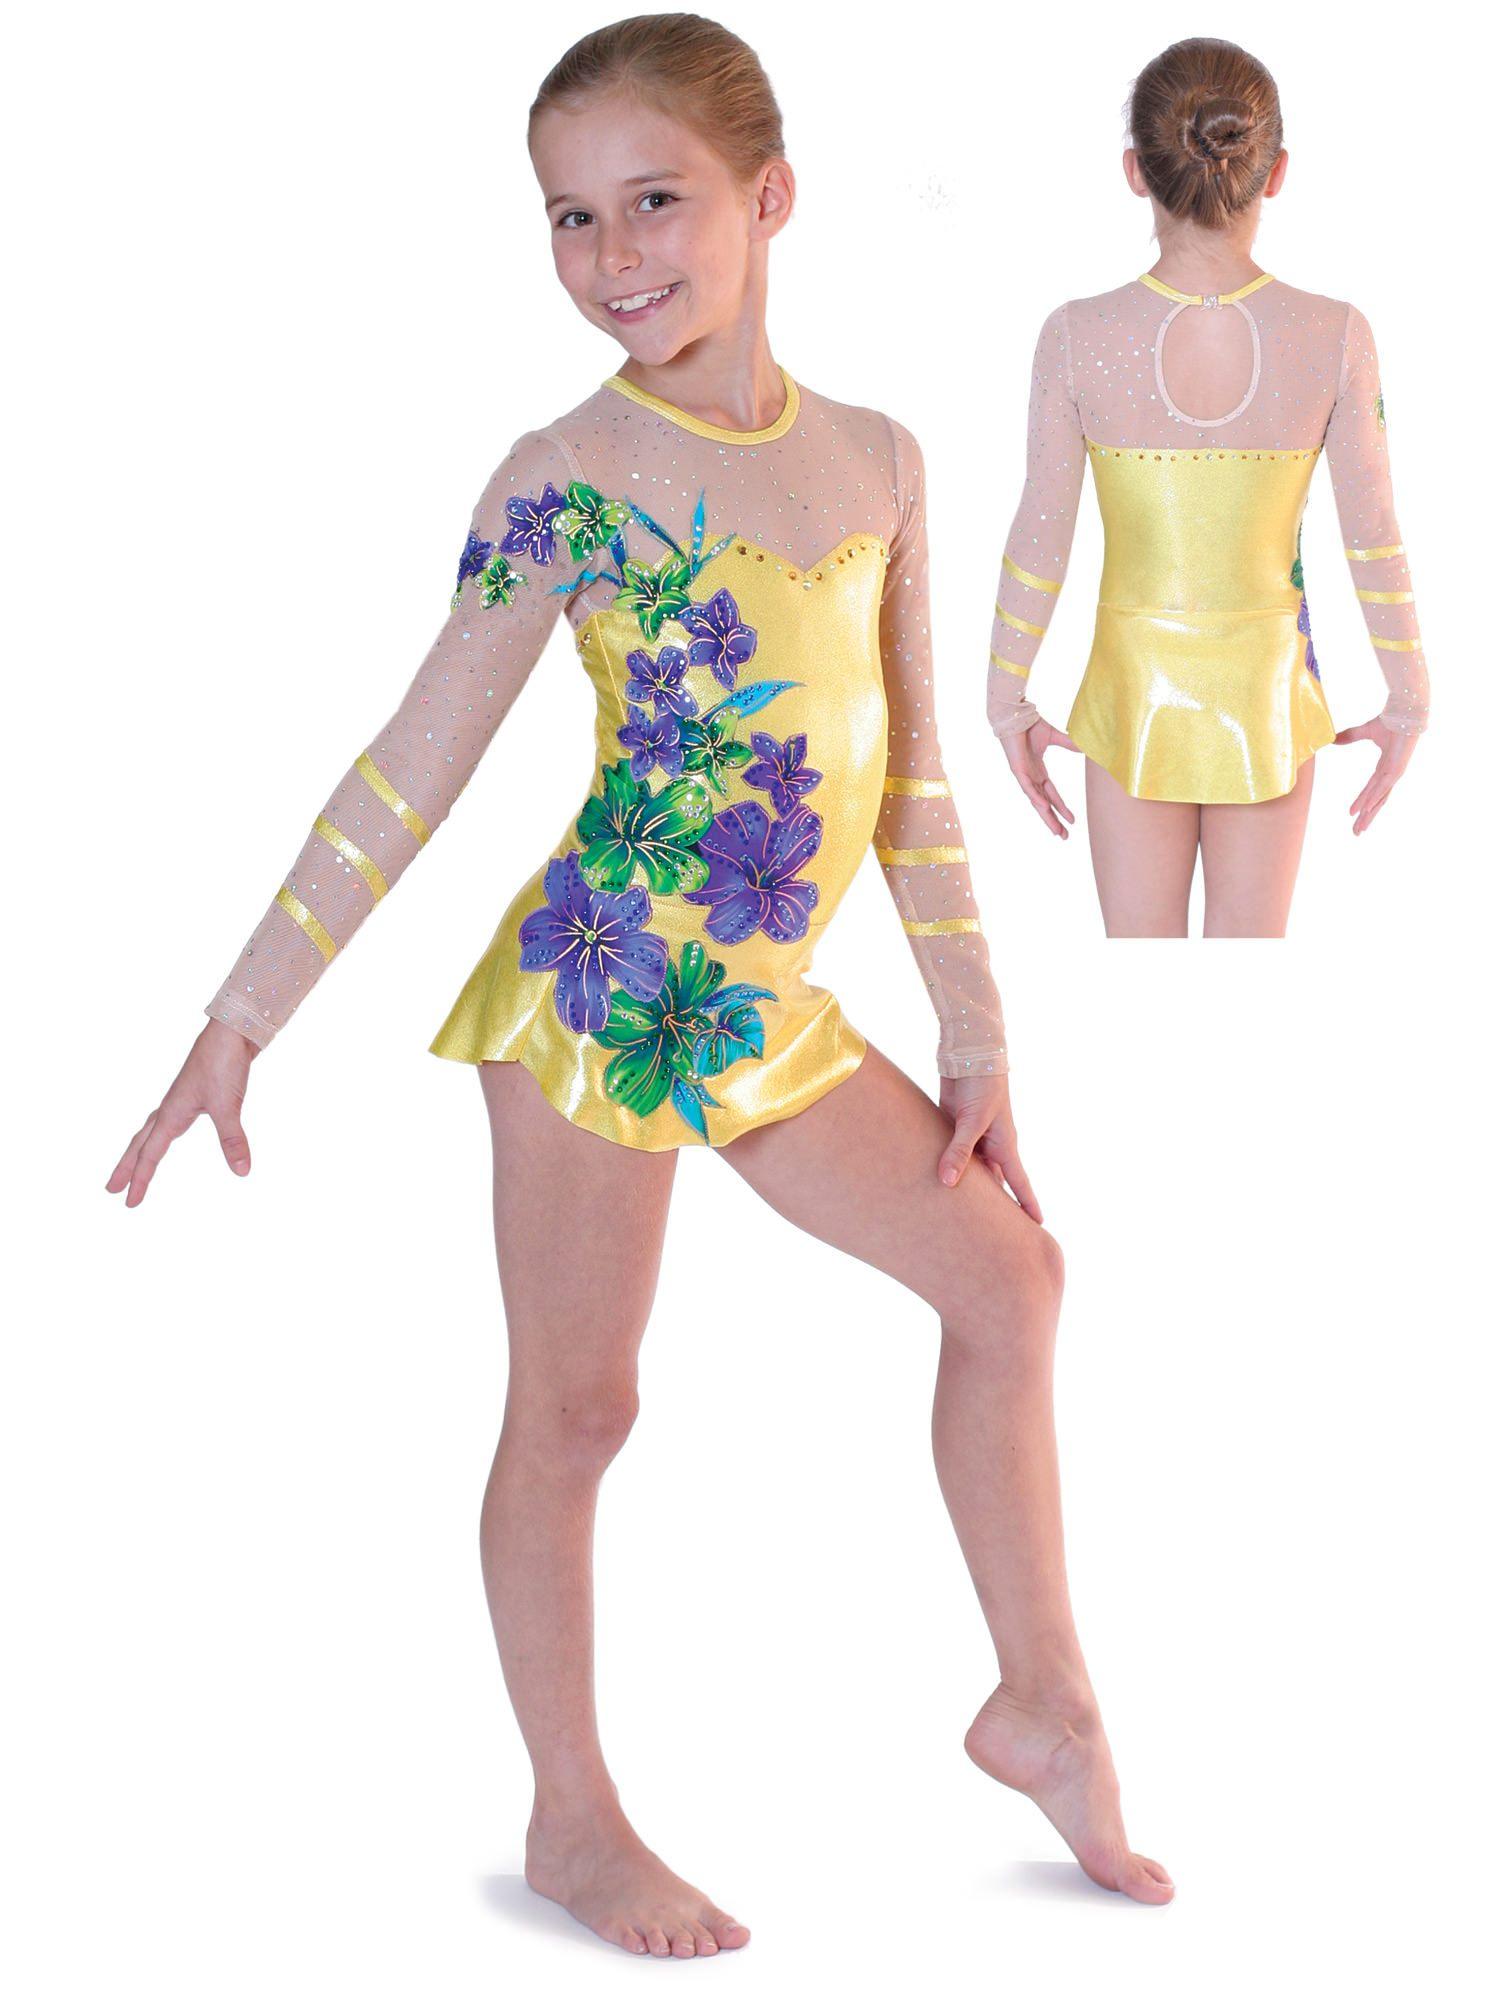 Jalie 3026 - Rhythmic Gymnastics Dress Pattern